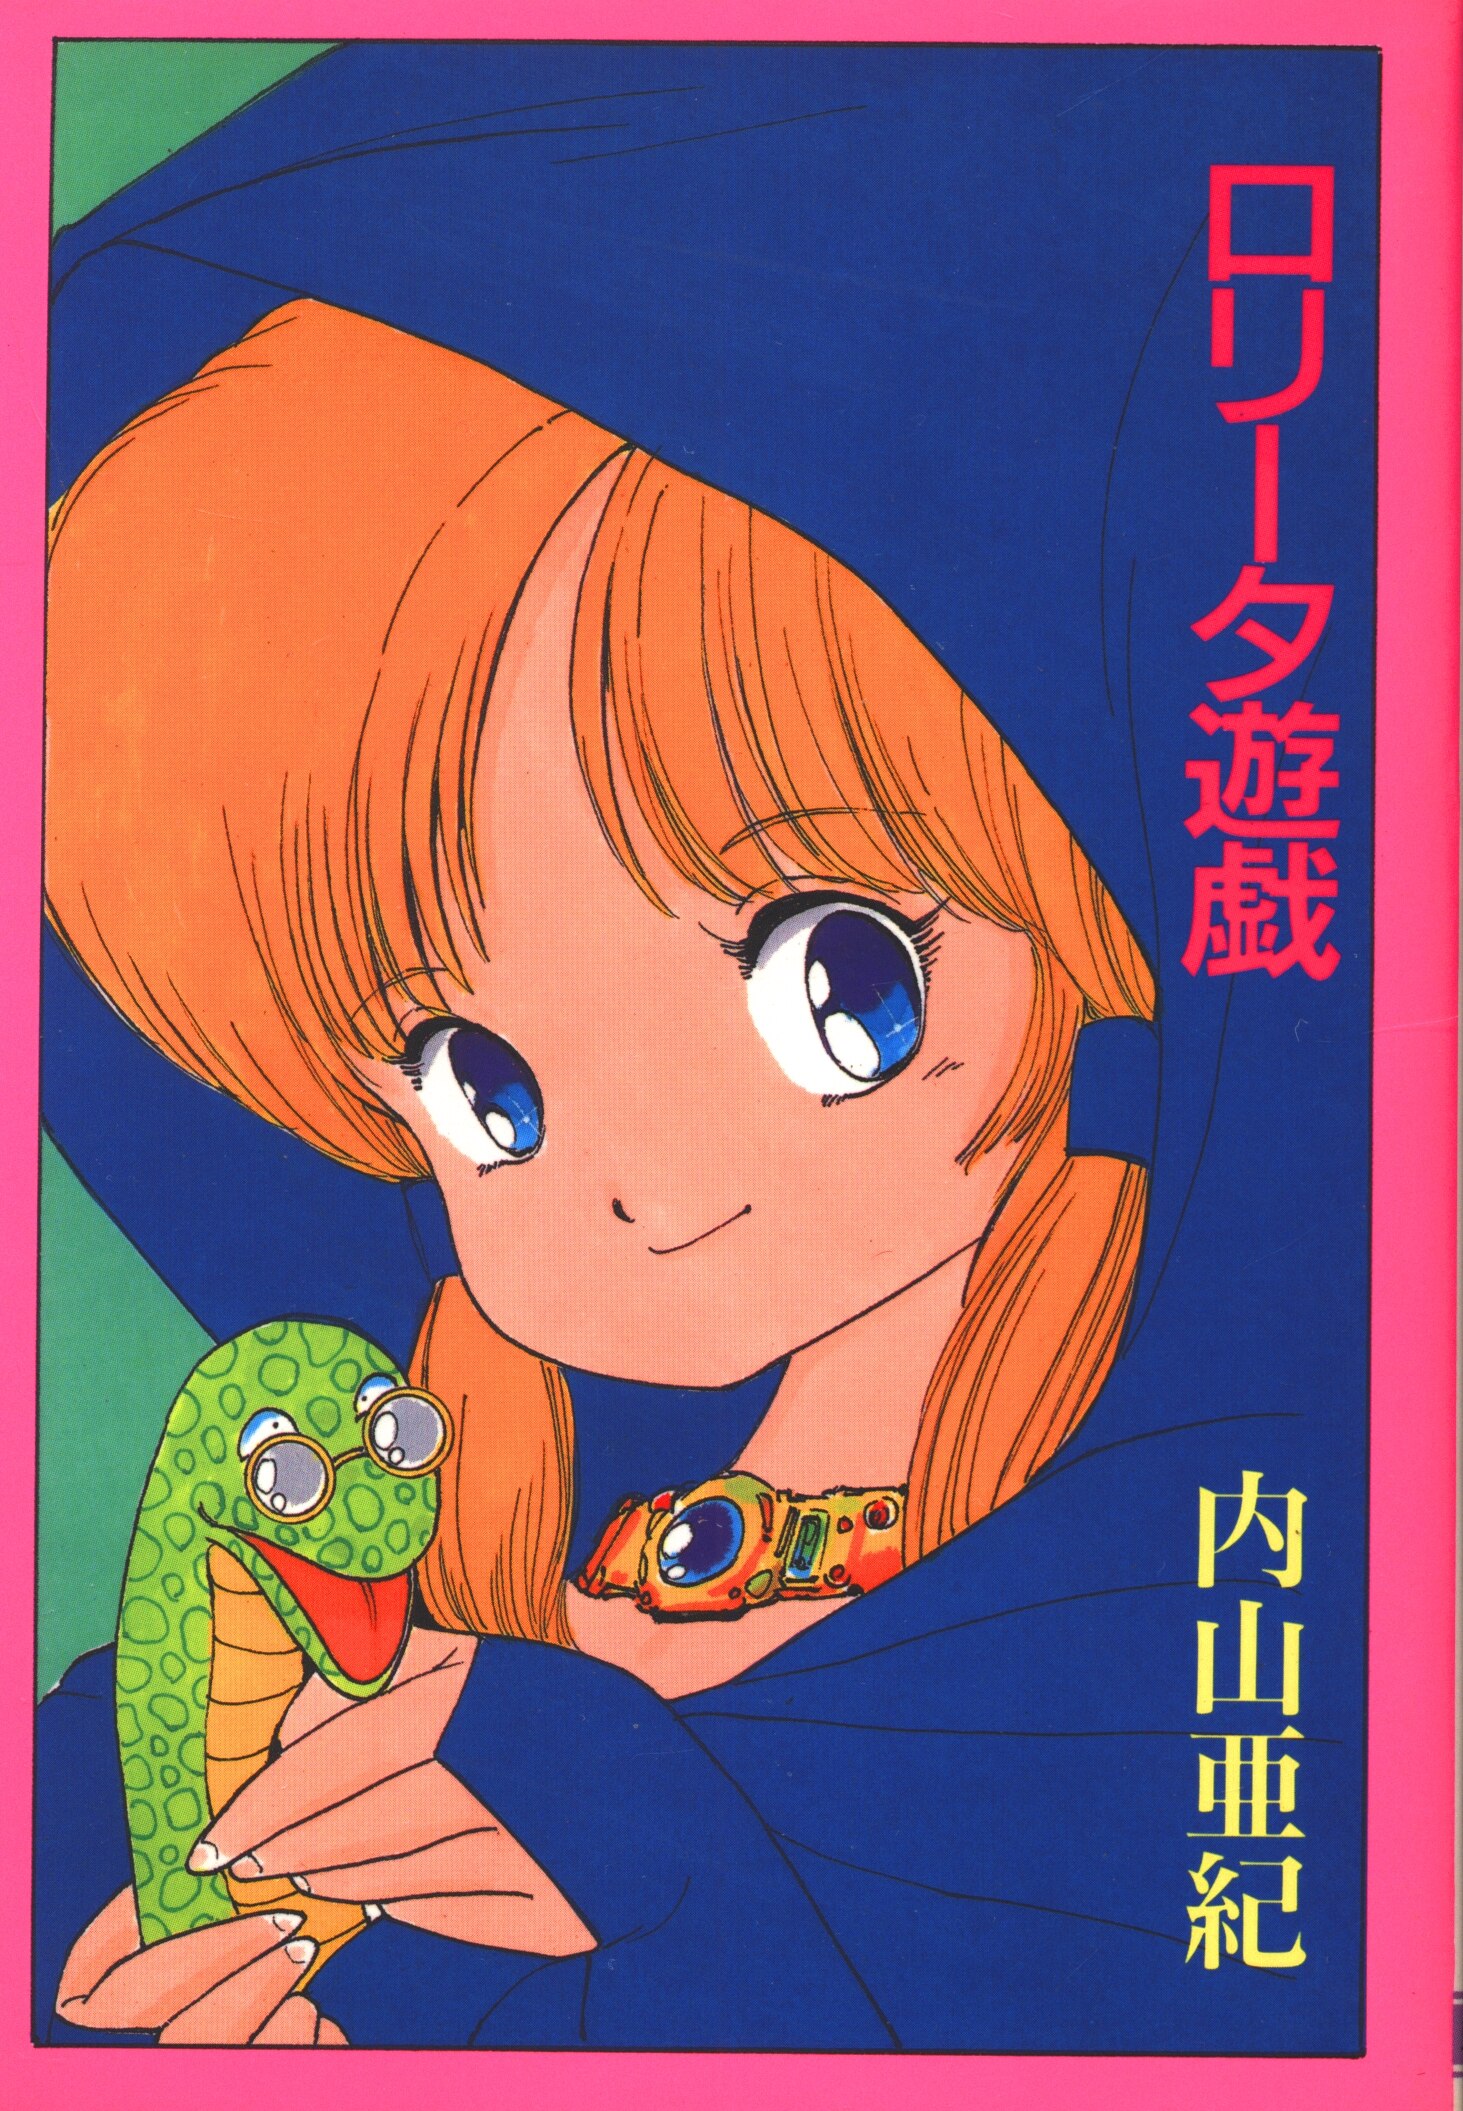 内山亜紀 ロリータ遊戯1989年1月25日初版発行 - jkc78.com